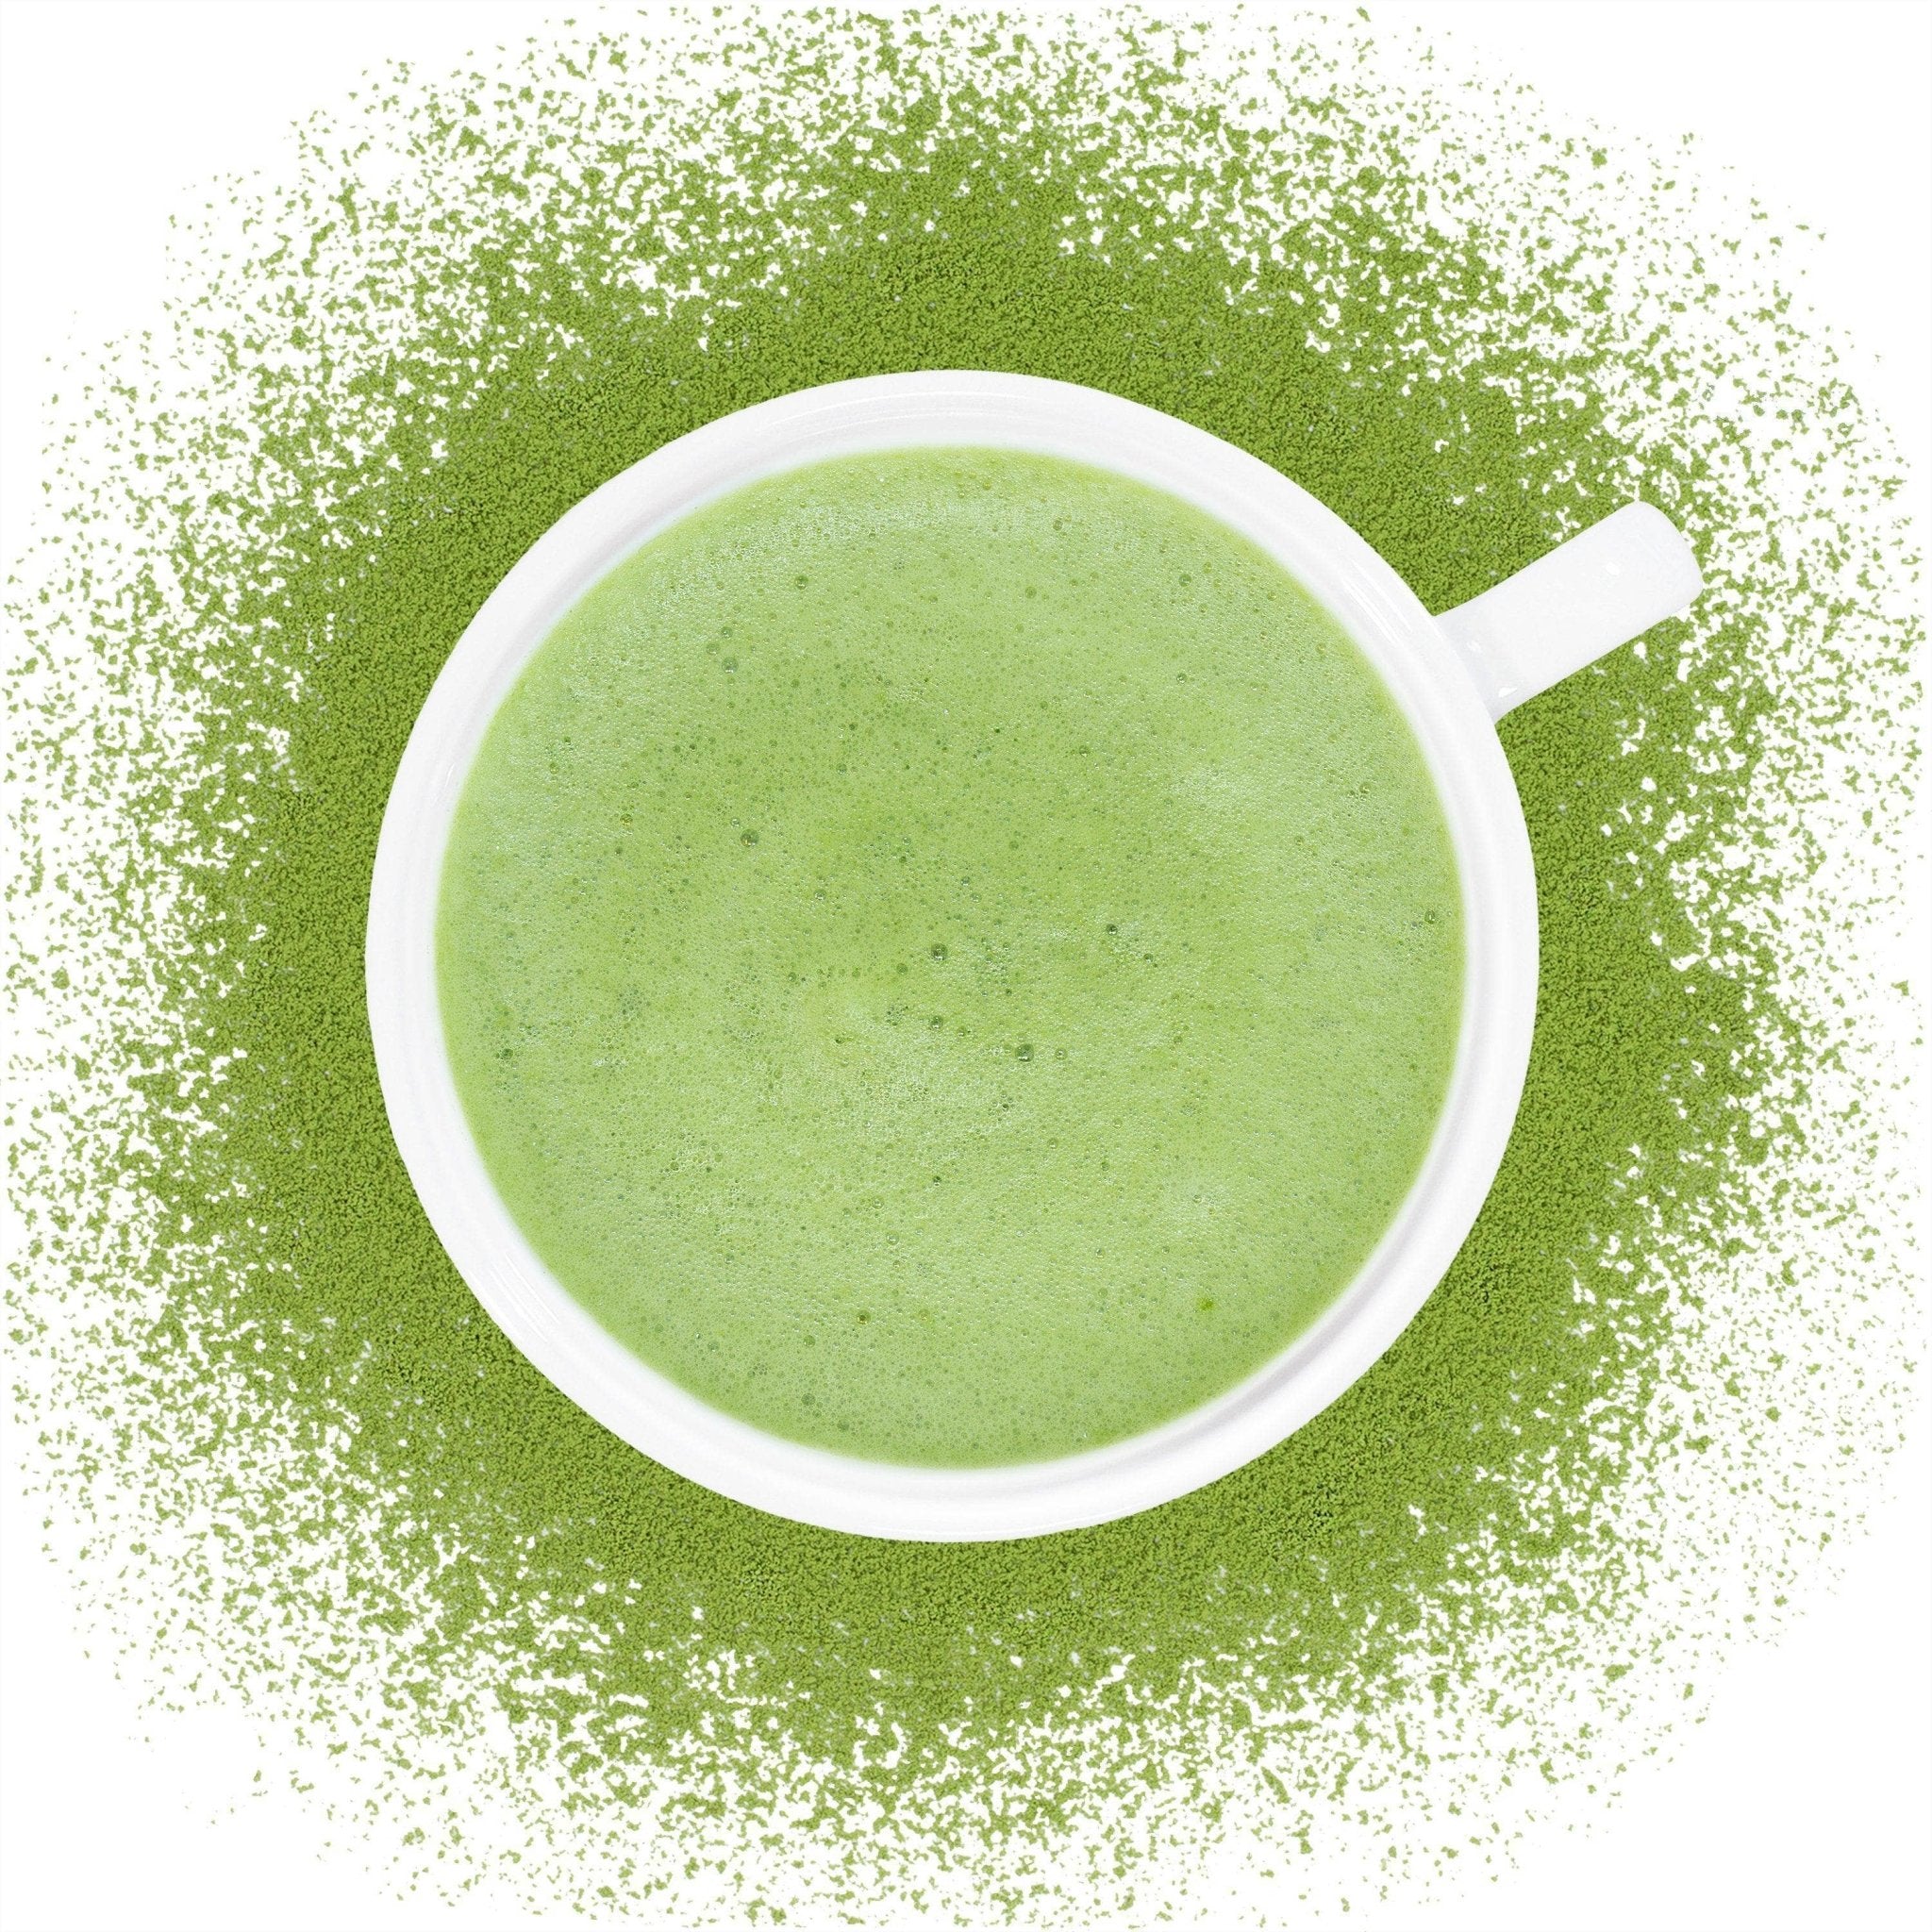 Matcha, Origins, Uses, Japanese Green Tea Type, & Health Benefits